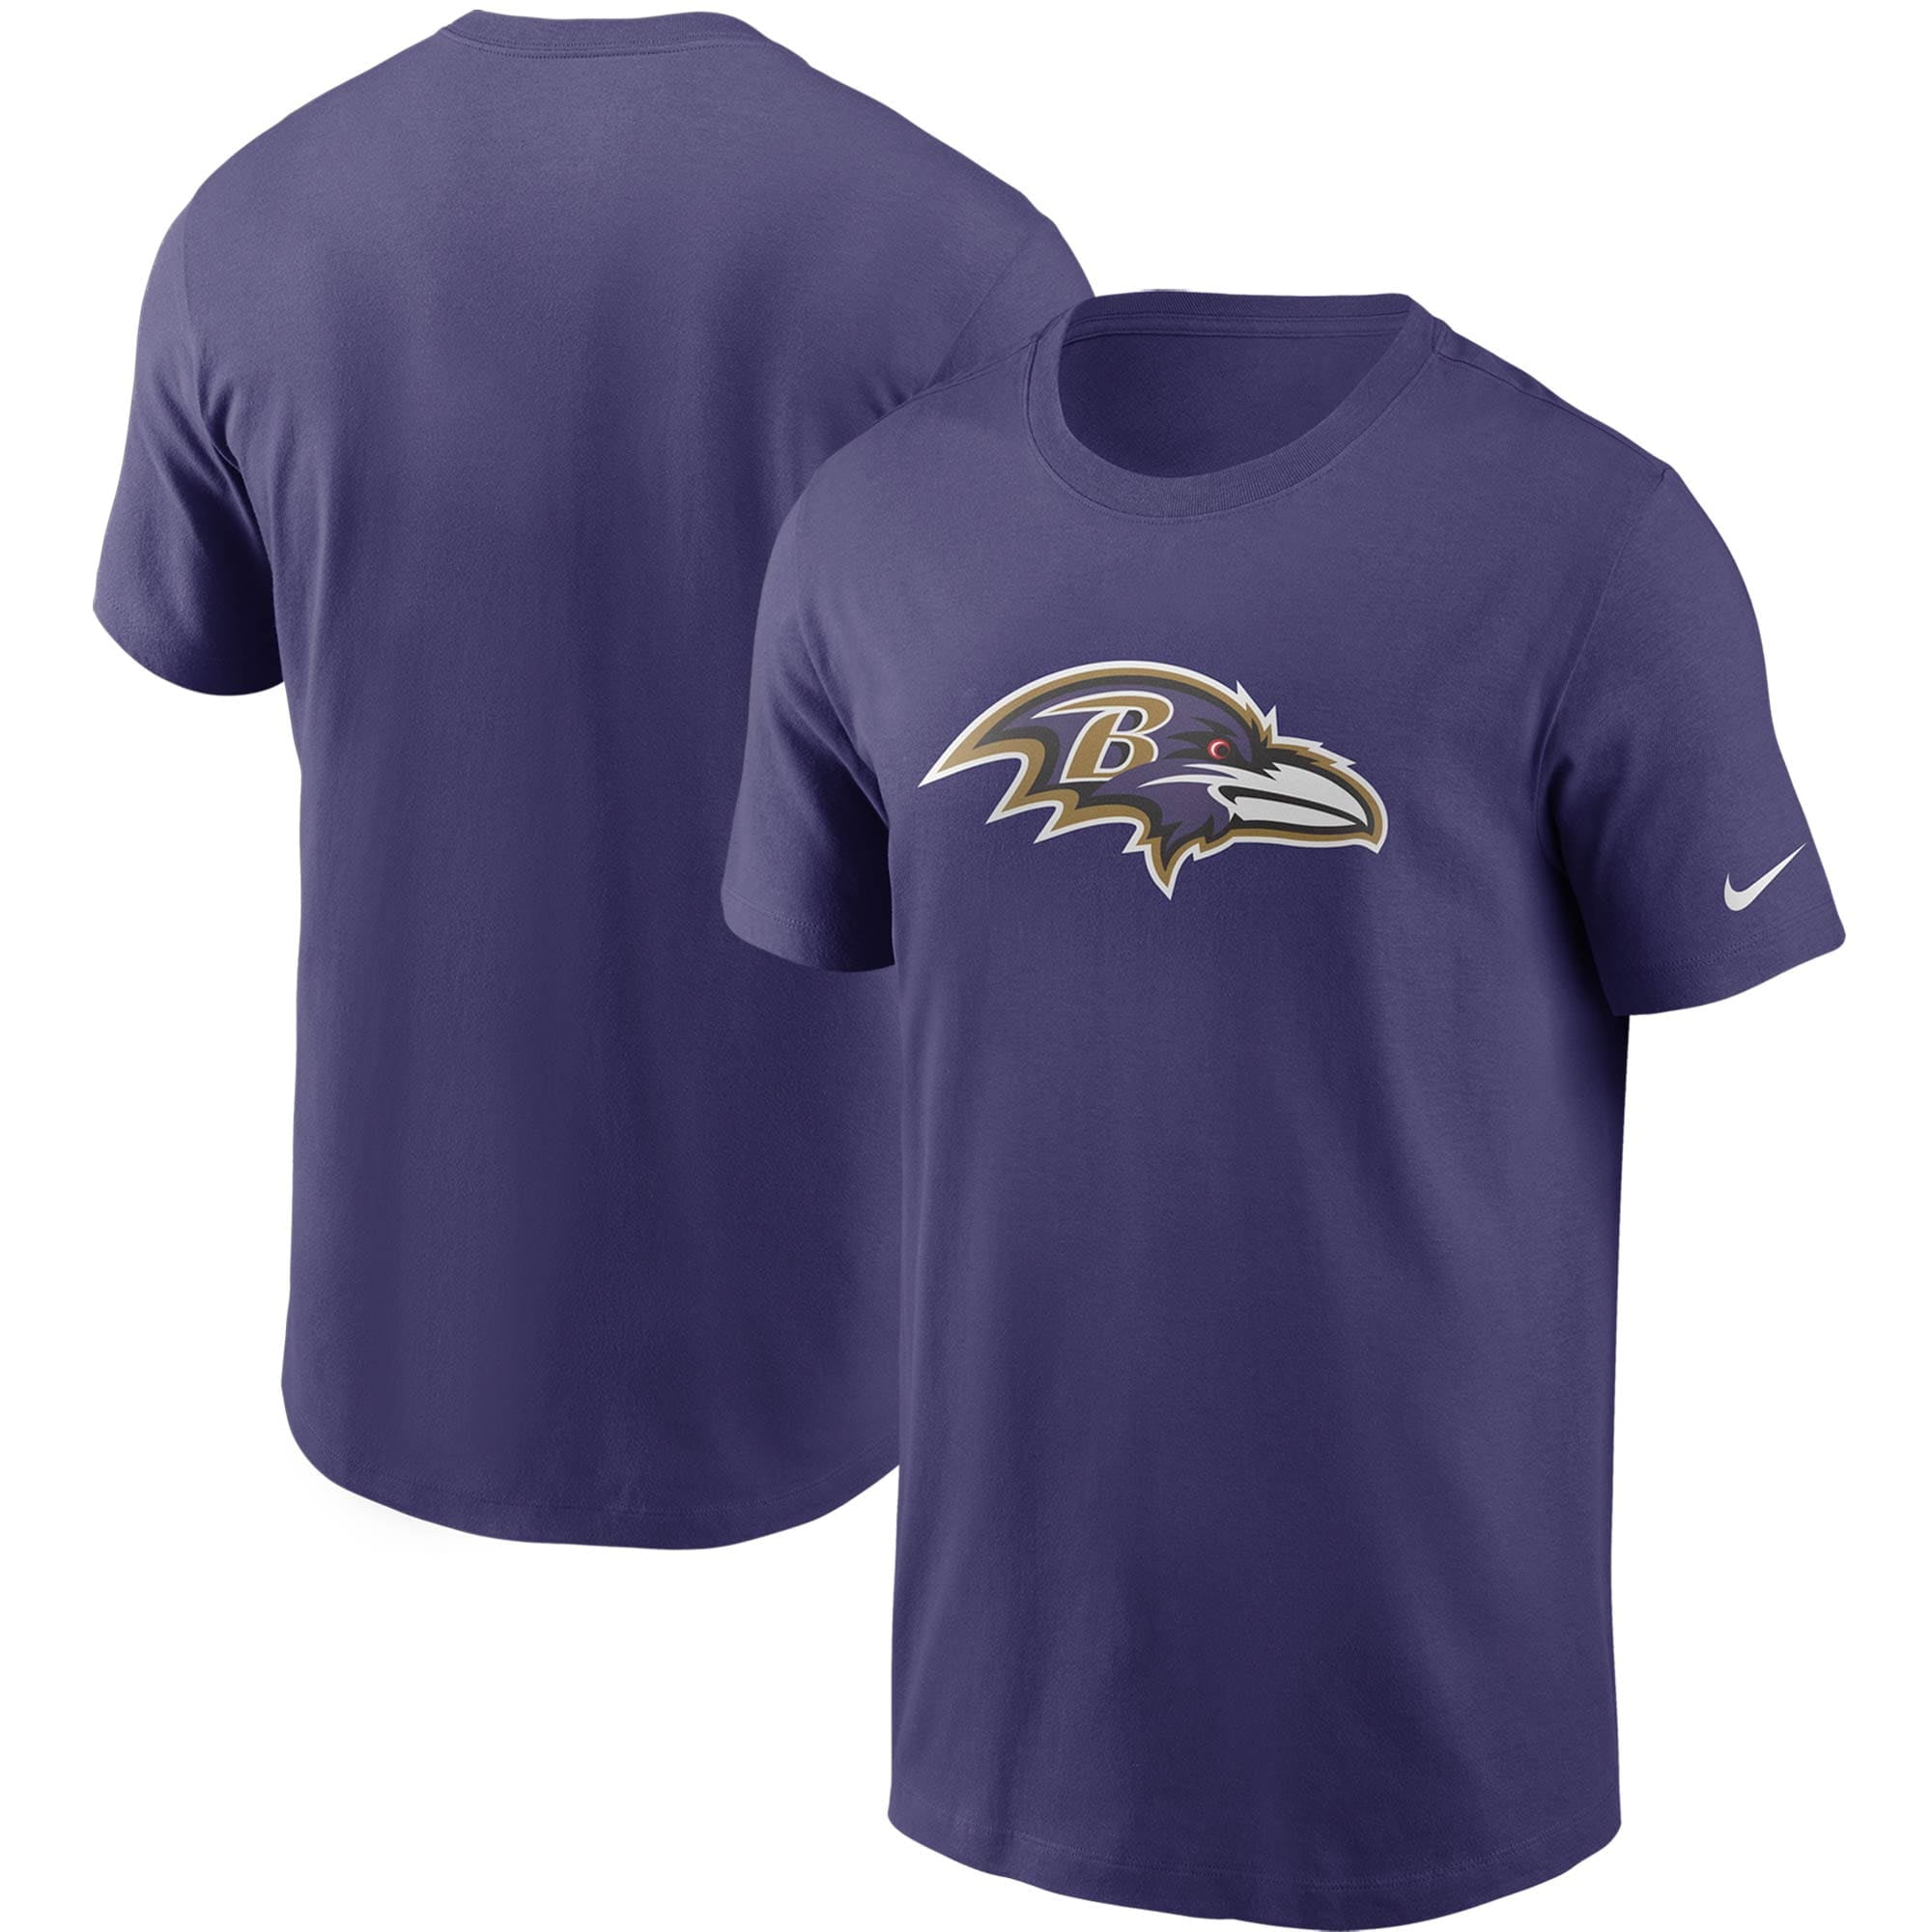 Men's Nike Purple Baltimore Ravens Primary Logo T-Shirt - Walmart.com